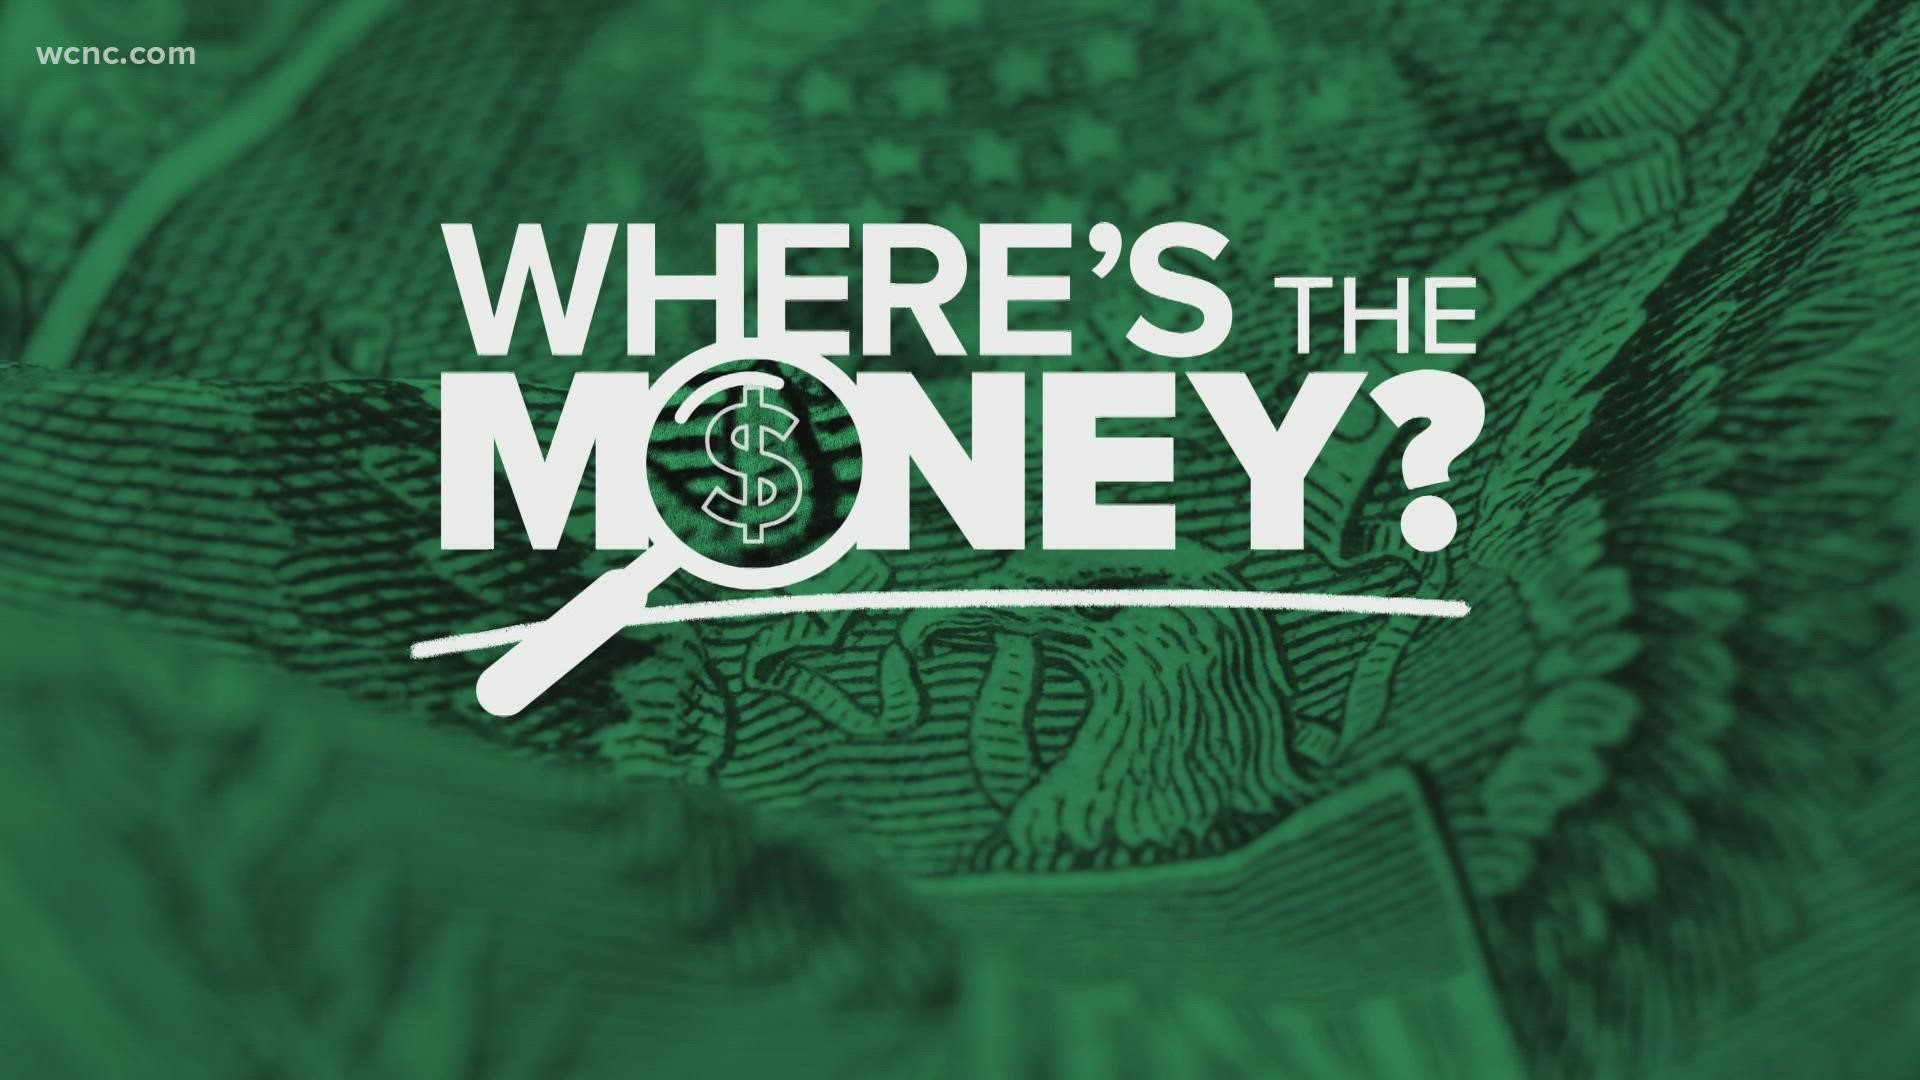 Ben Thompson asks "where's the money".